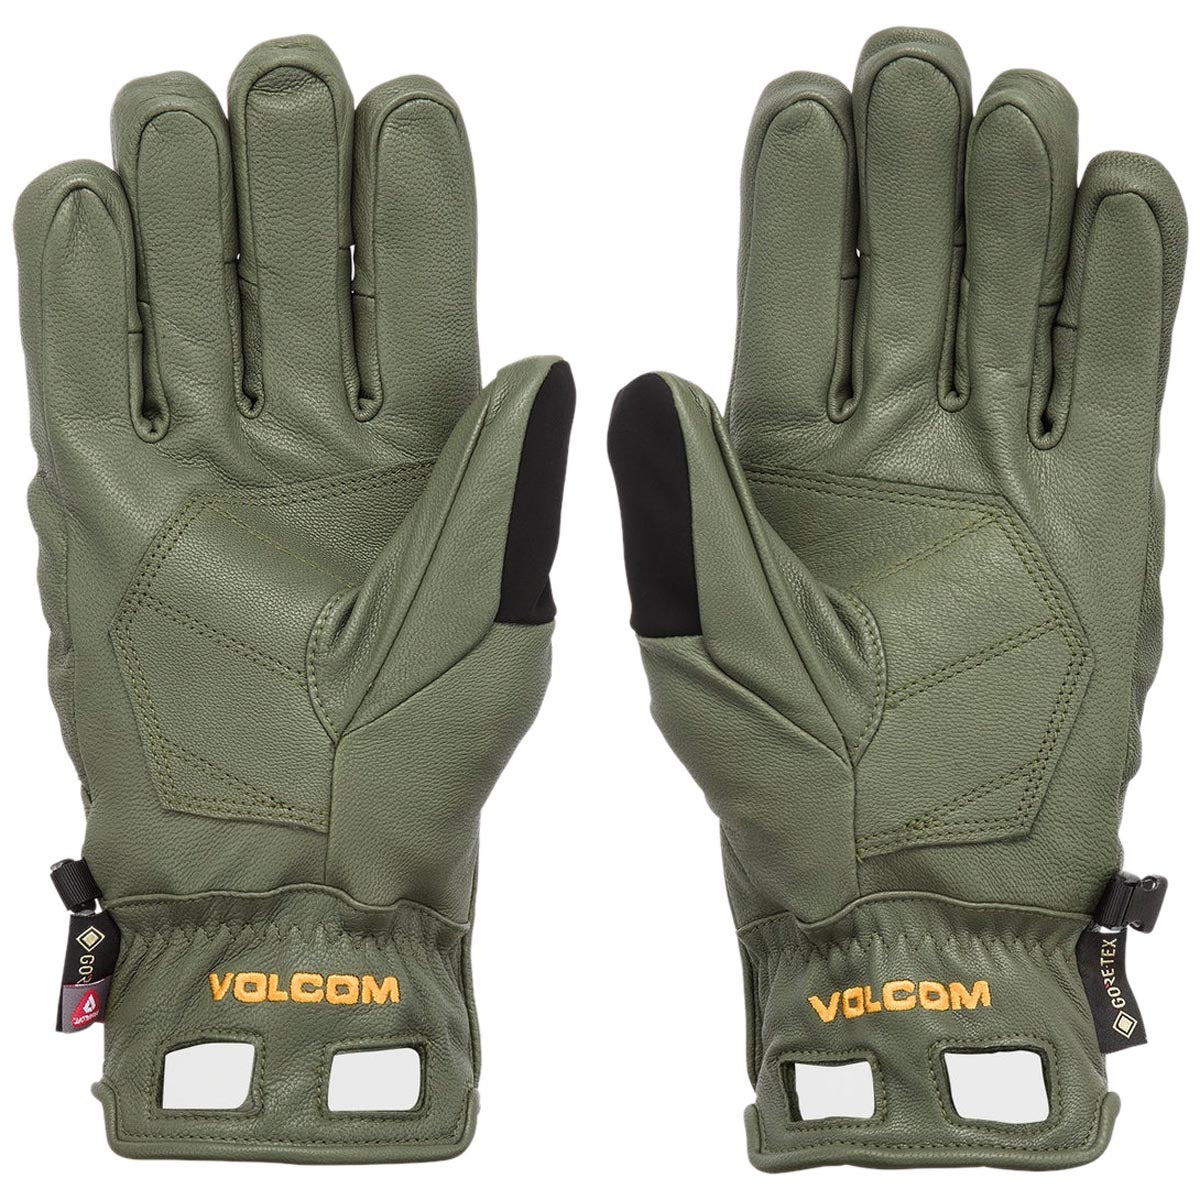 Volcom Service Gore-tex Snowboard Gloves - Military image 2